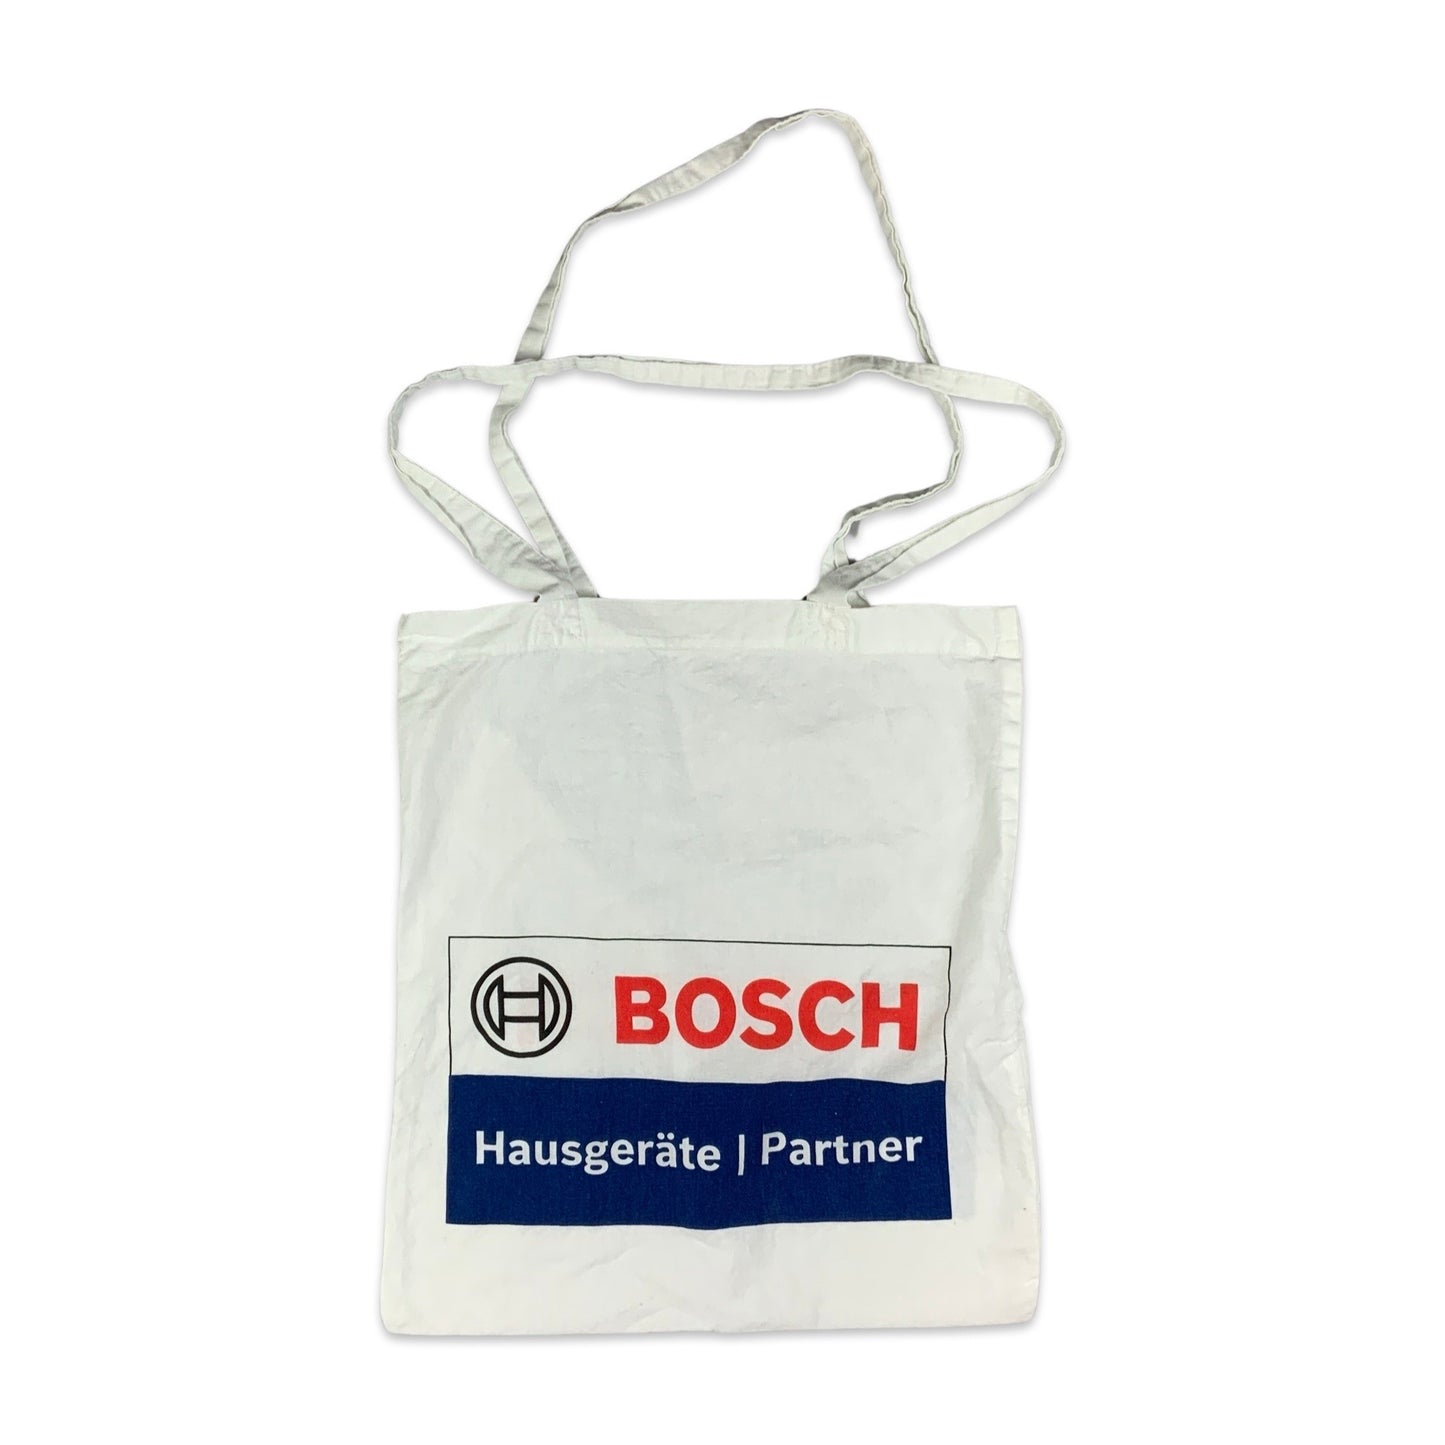 Bosch Graphic Print Canvas Tote Bag